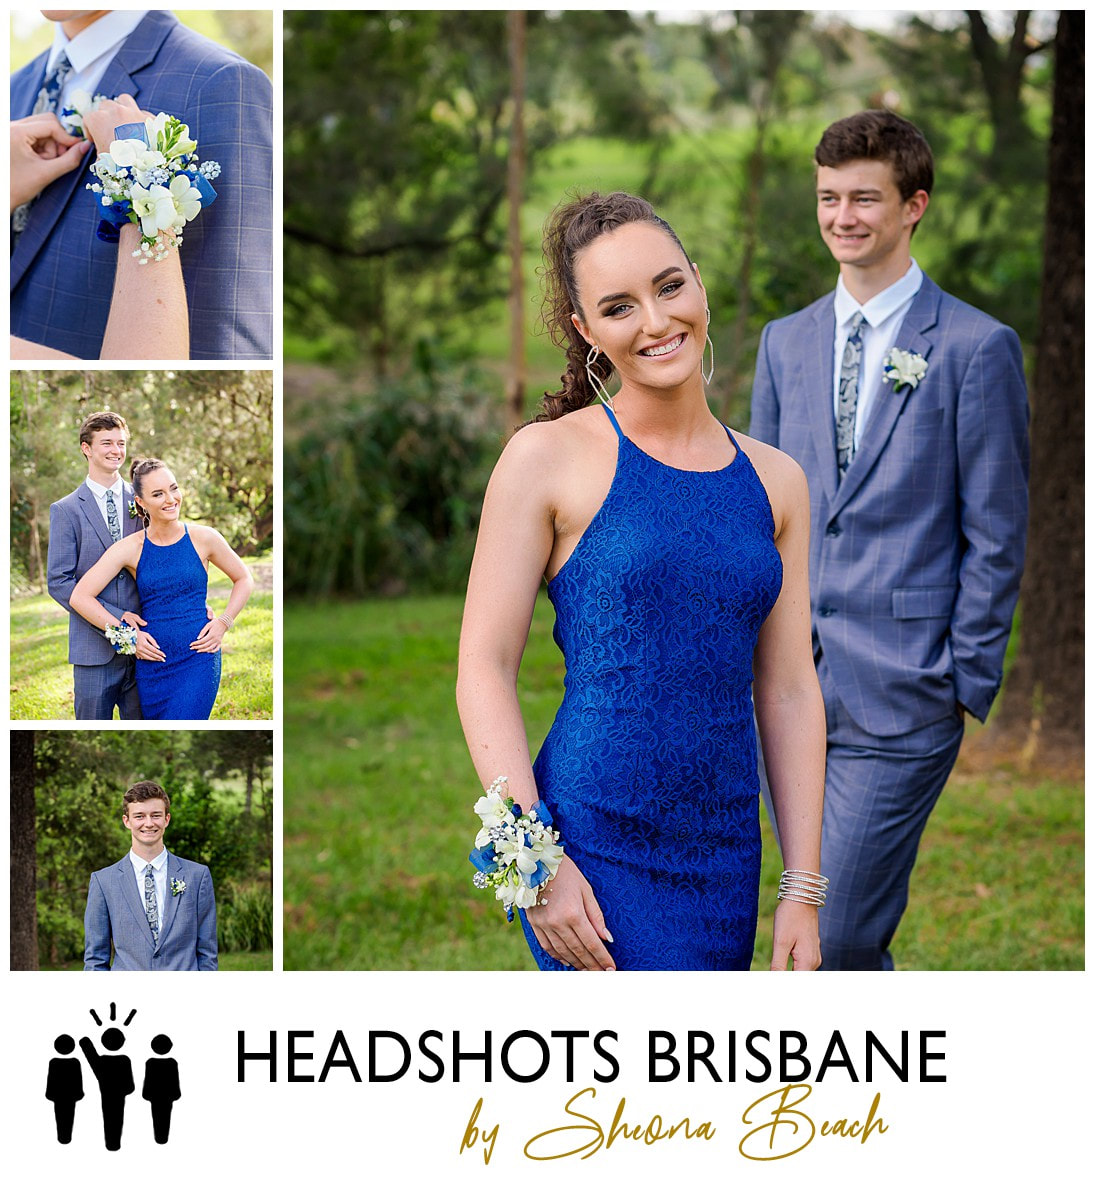 Brisbane school formal portrait photographer Sheona Beach